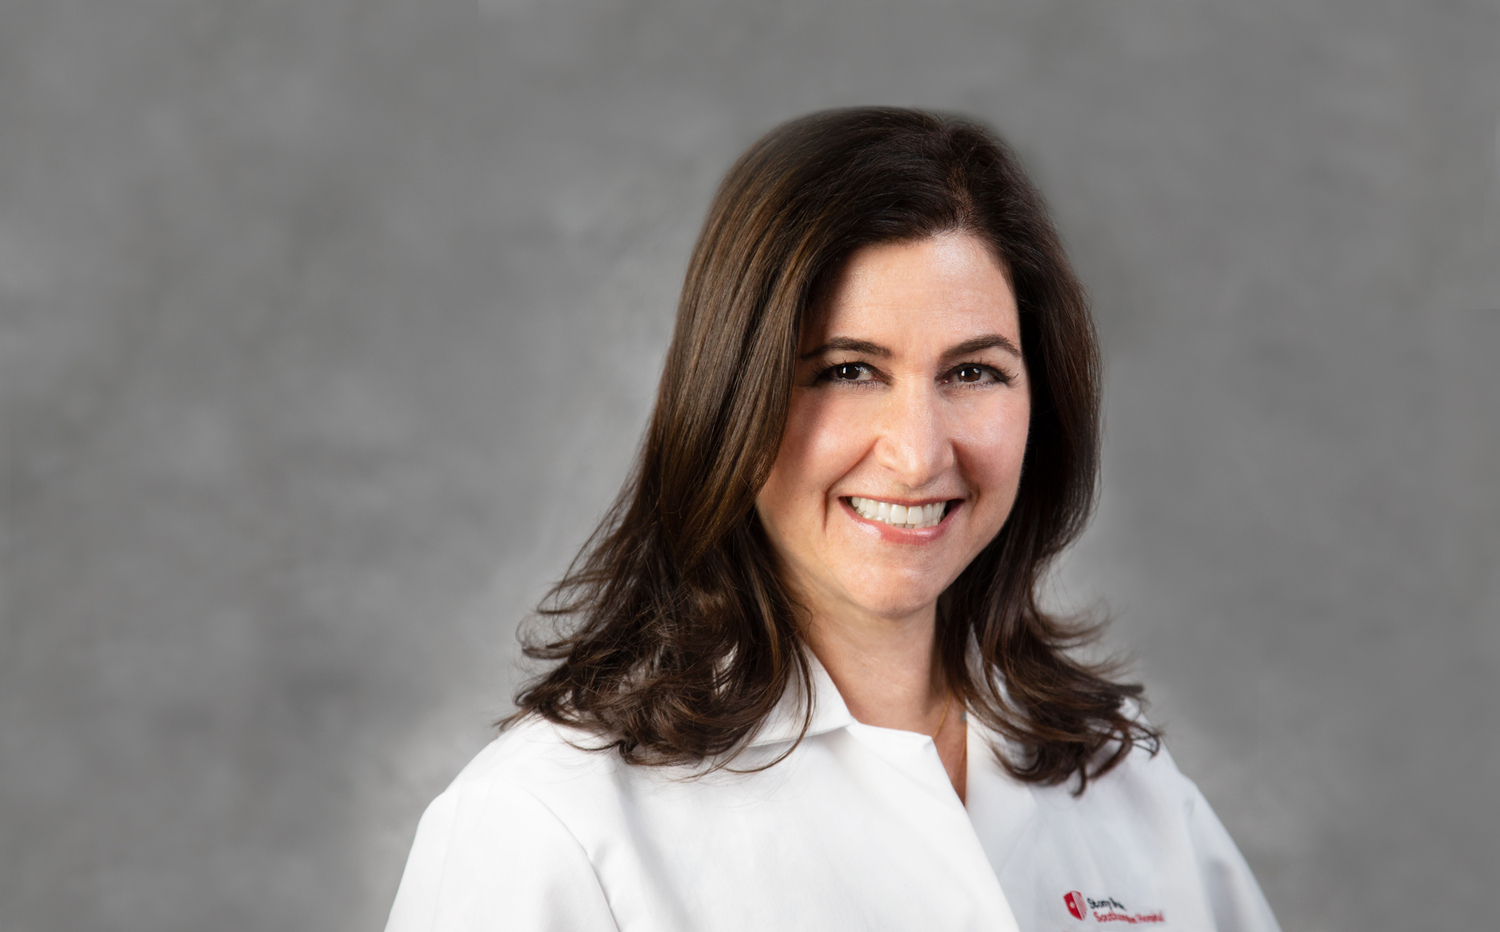 Marta Kazandjian, head of the speech pathology and swallowing program at Stony Brook Southampton Hospital. COURTESY STONY BROOK SOUTHAMPTON HOSPITAL